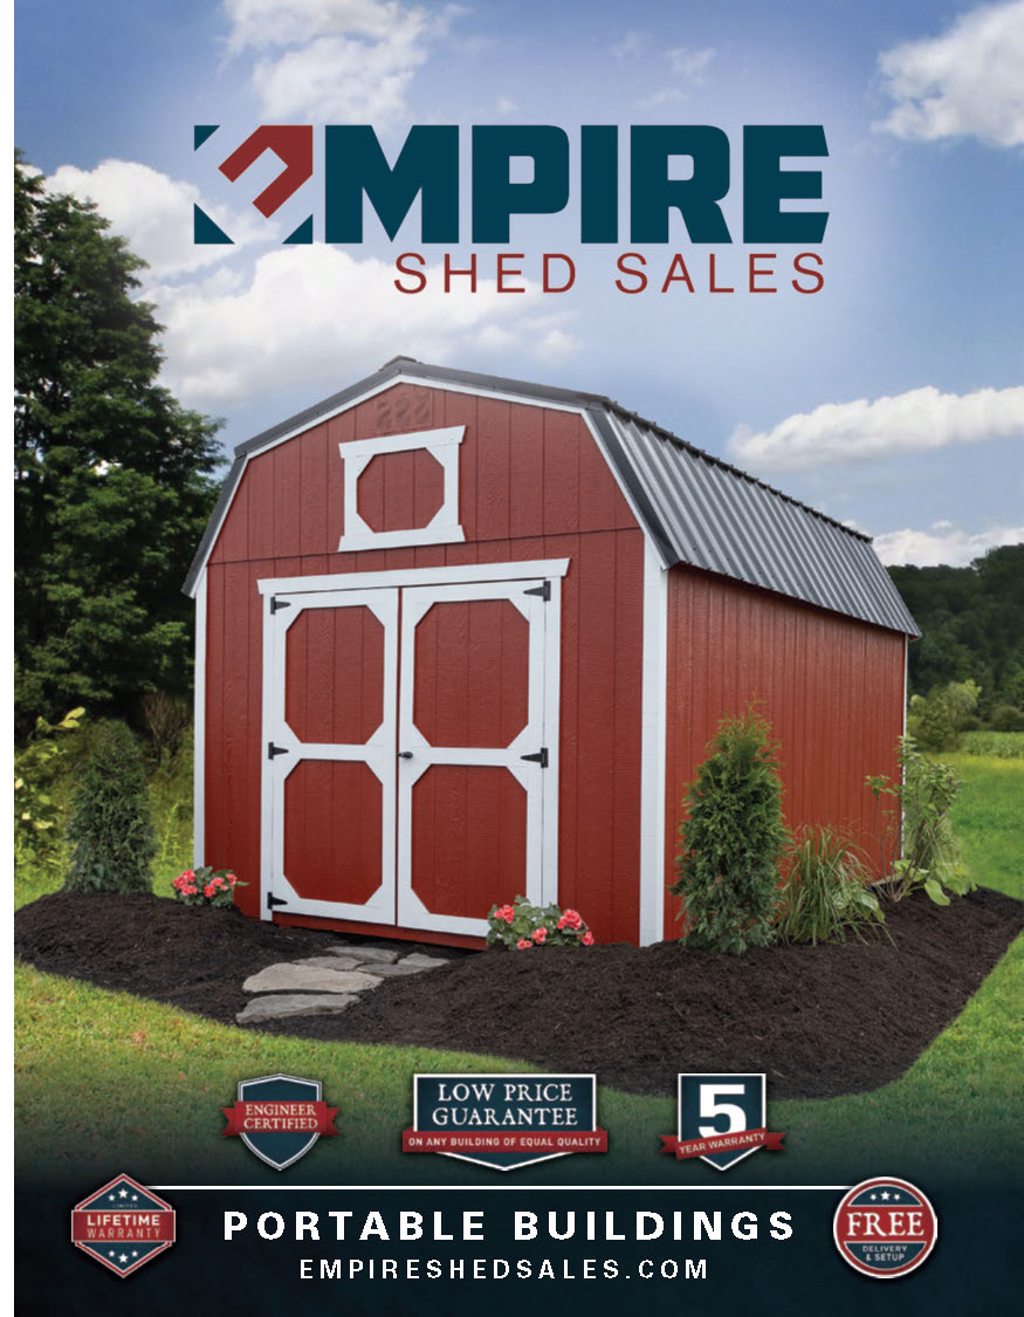 Empire Shed Sales - Portable Buildings Brochure (Thumbnail)